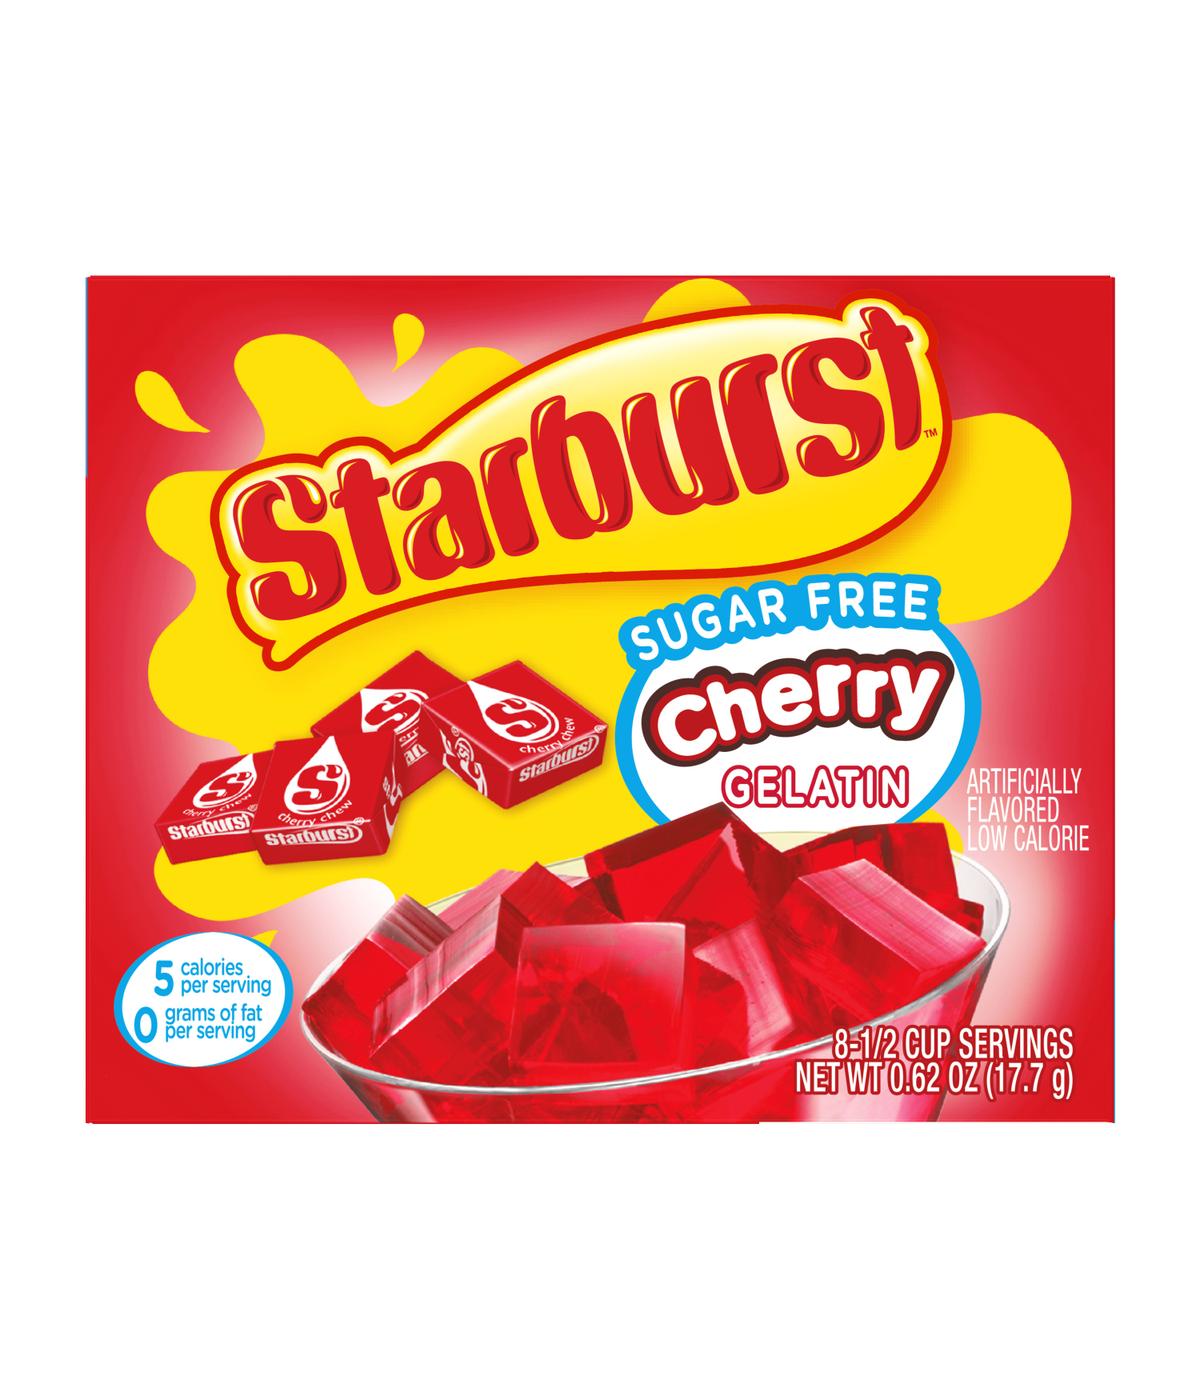 Starburst Gelatin - Sugar Free Cherry; image 1 of 3